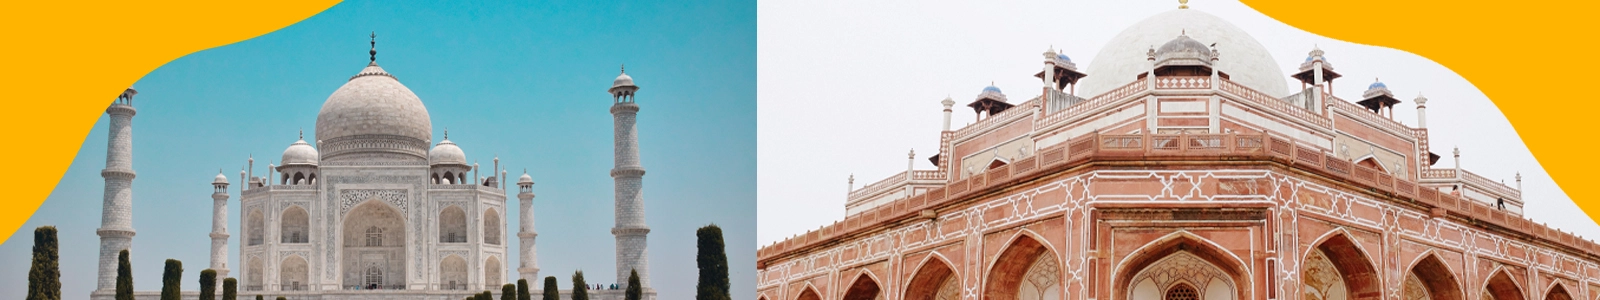 Delightful Private Day City Tour from Delhi to Agra